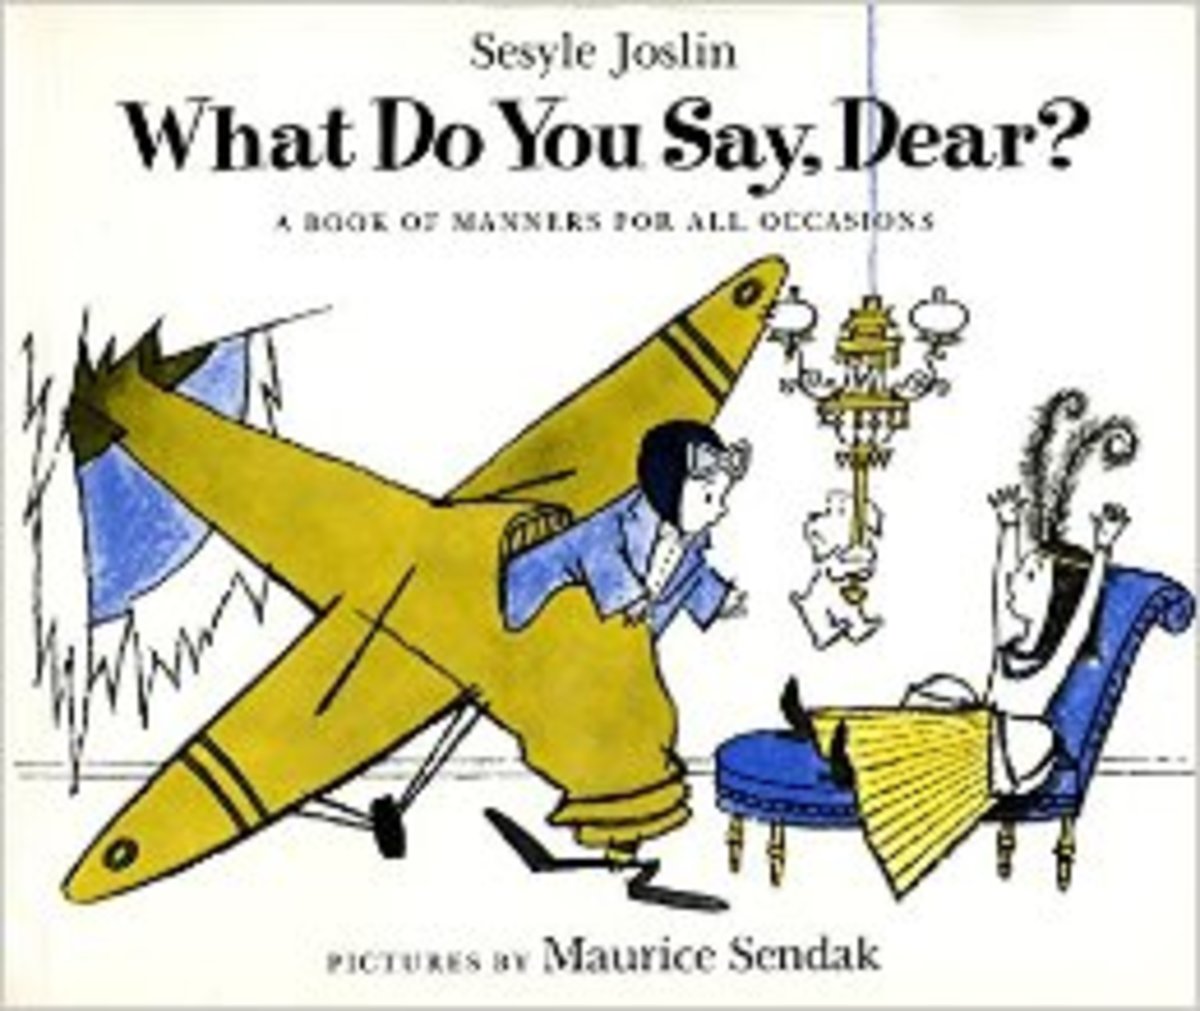 What Do You Say, Dear? by Sesyle Joslin